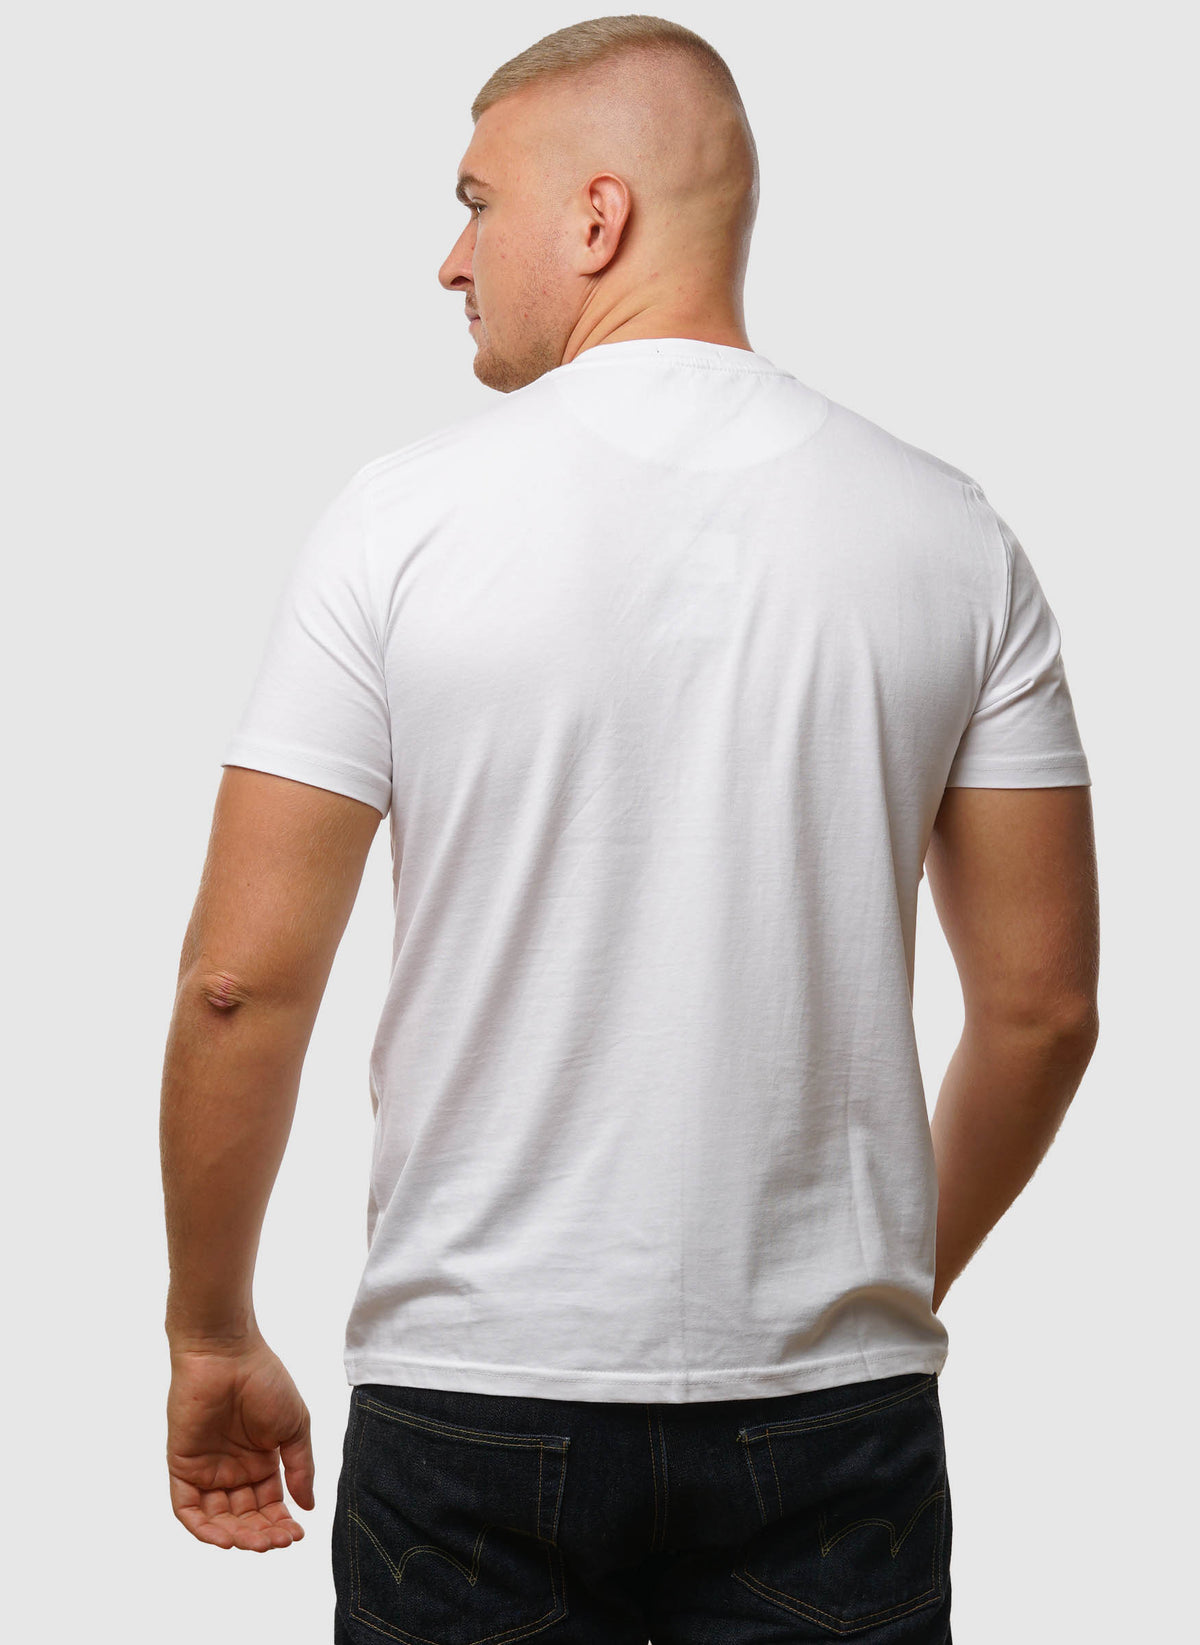 Chang T-Shirt - White